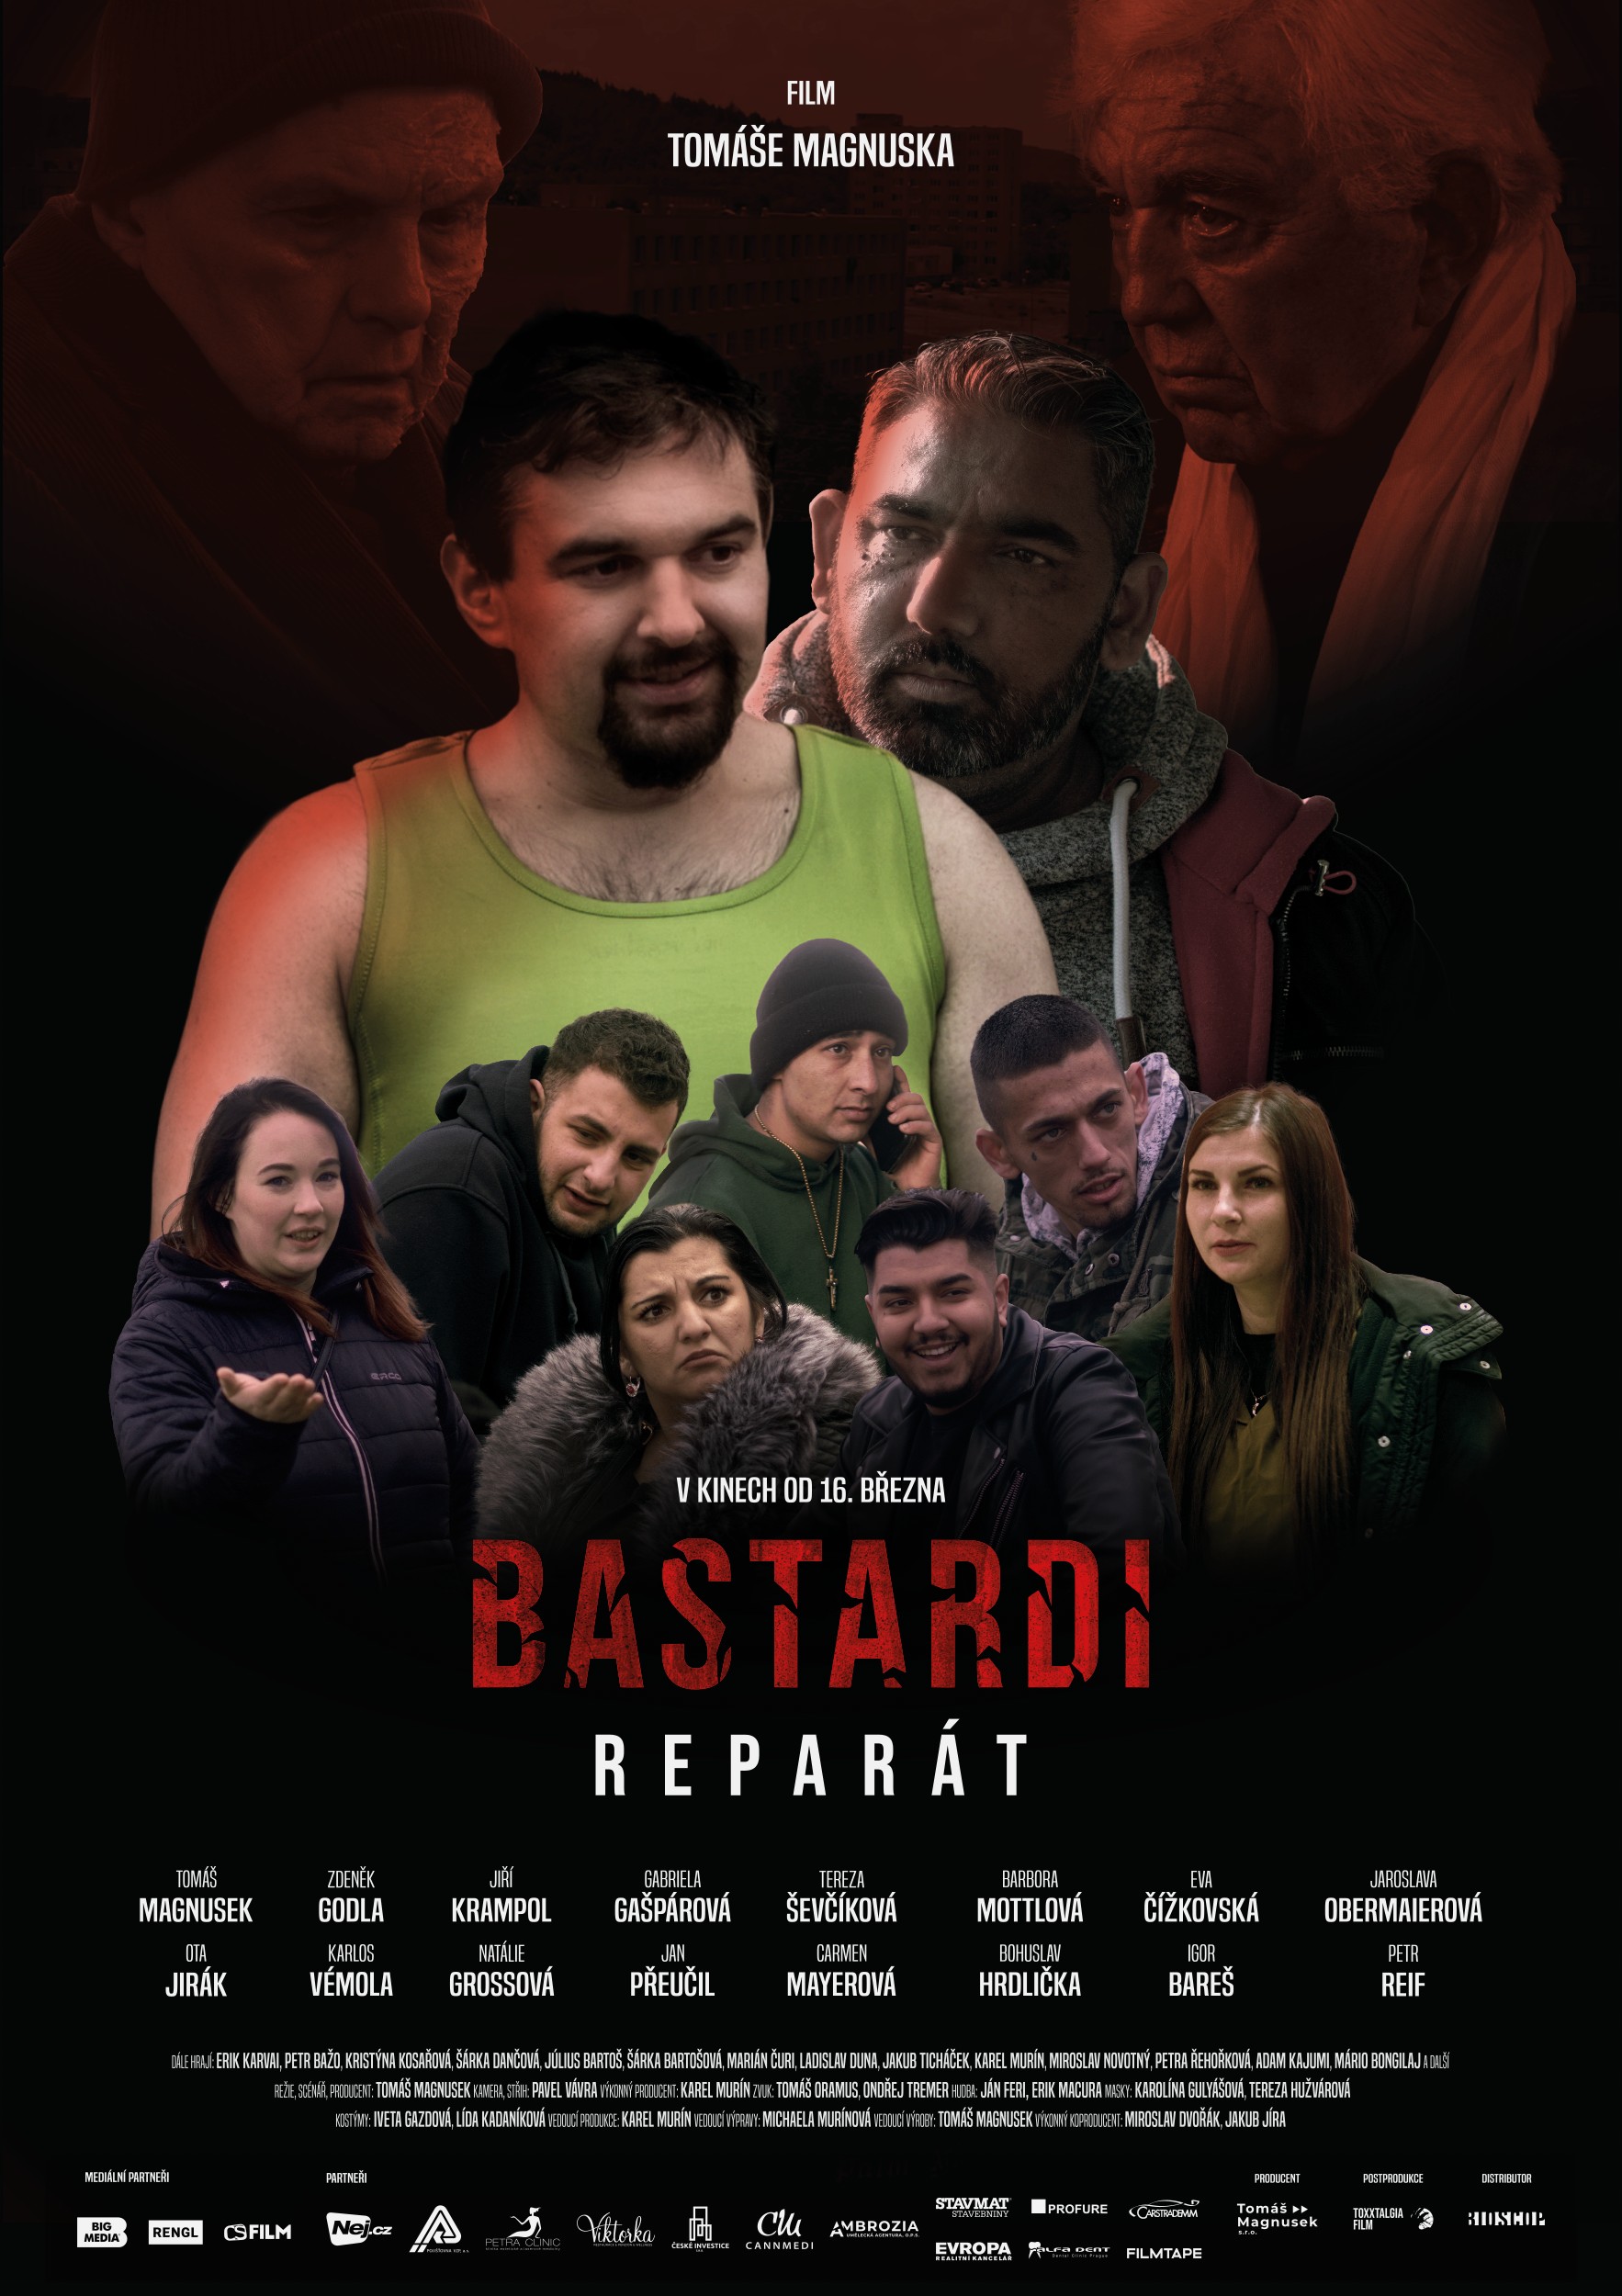 Kolik dílů má film Bastardi?